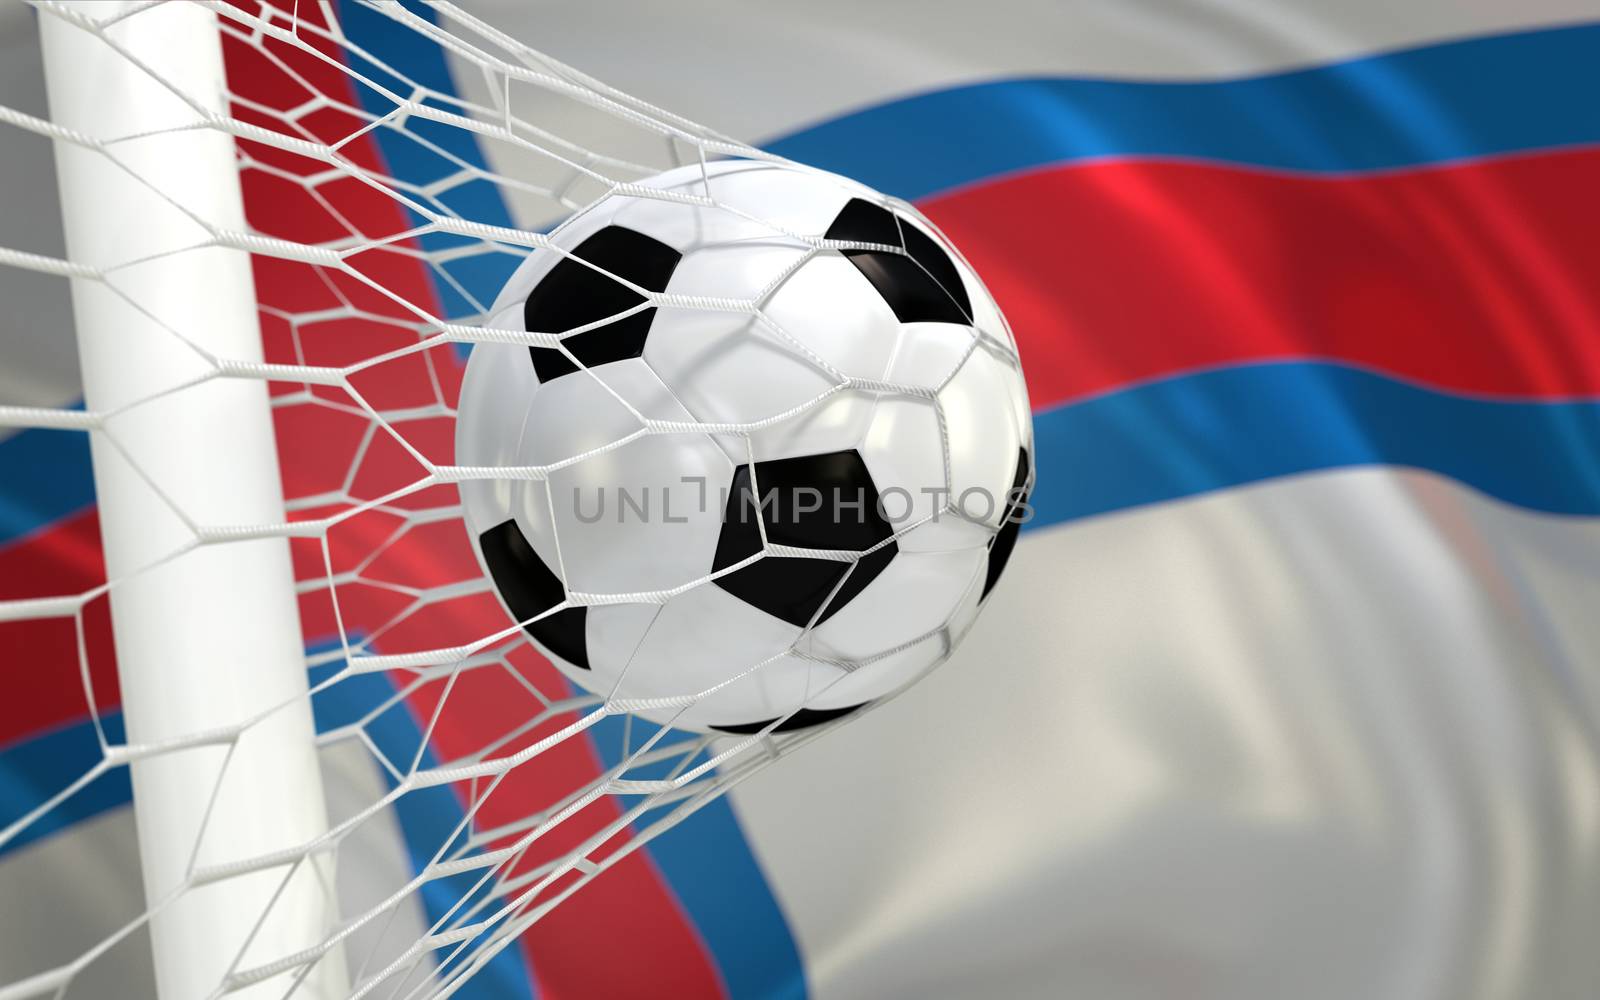 Faroe Islands flag and soccer ball, football in goal net